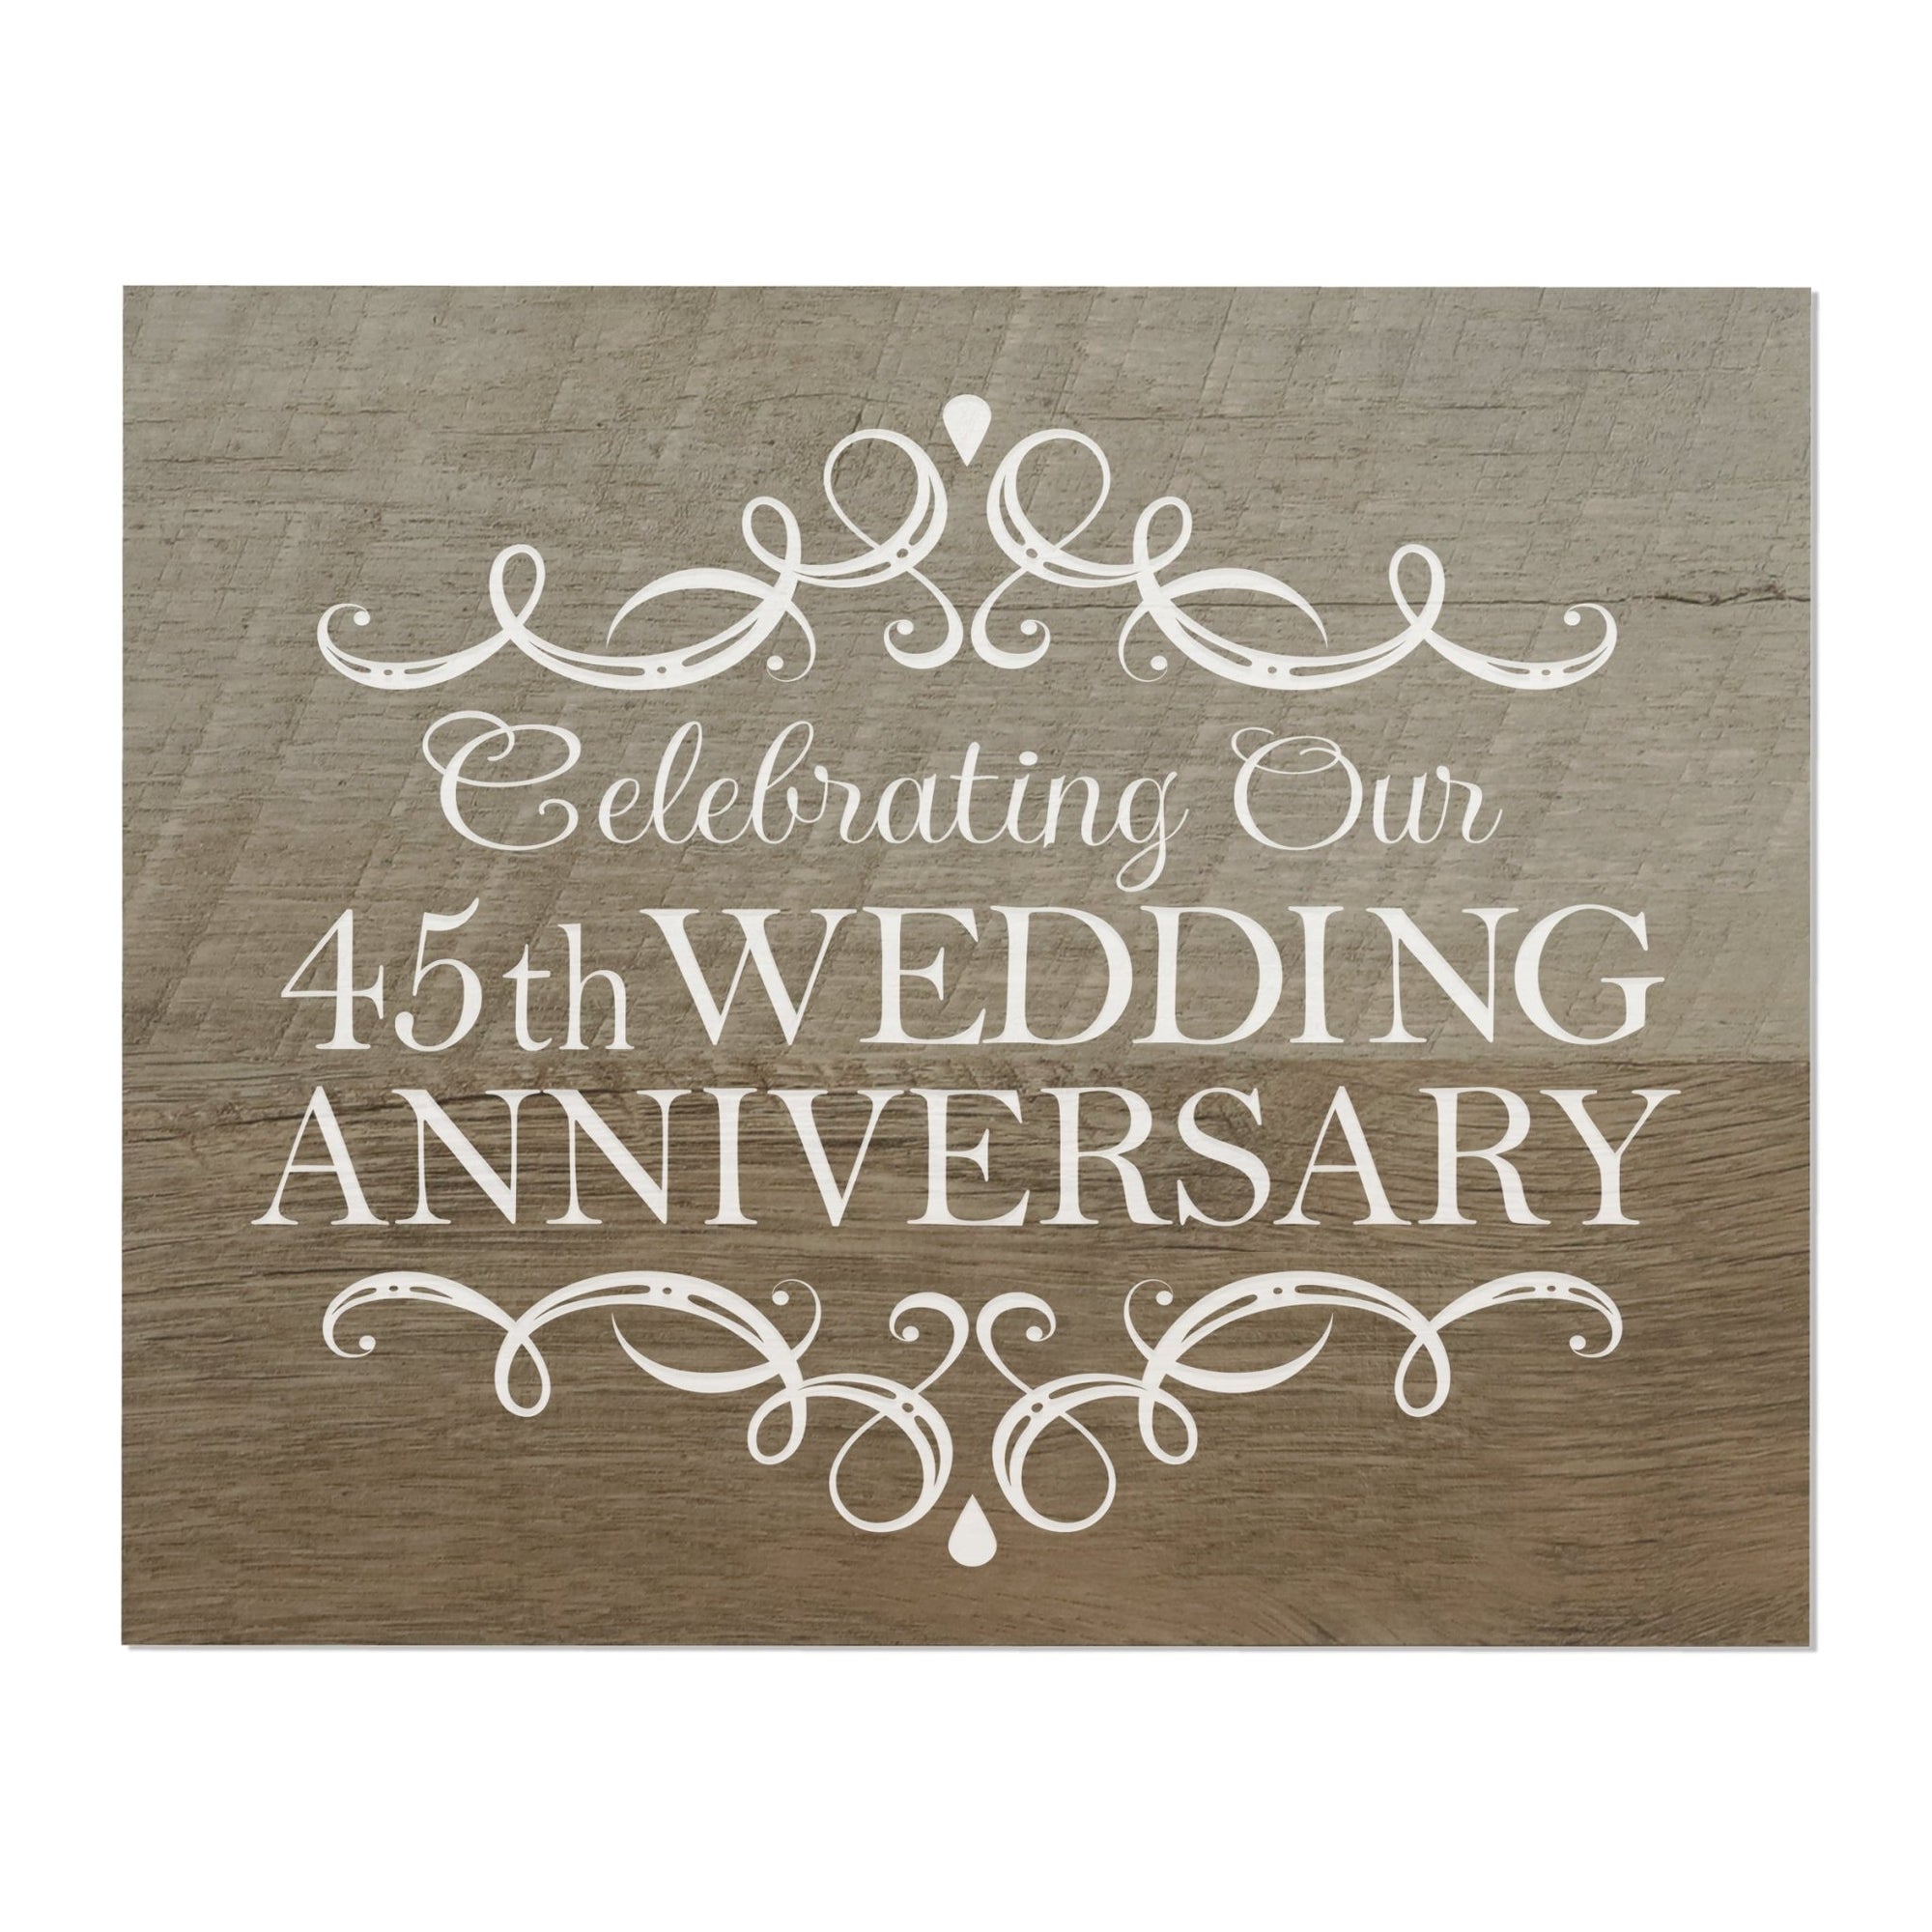 45th Wedding Anniversary Wall Plaque - Celebrating - LifeSong Milestones